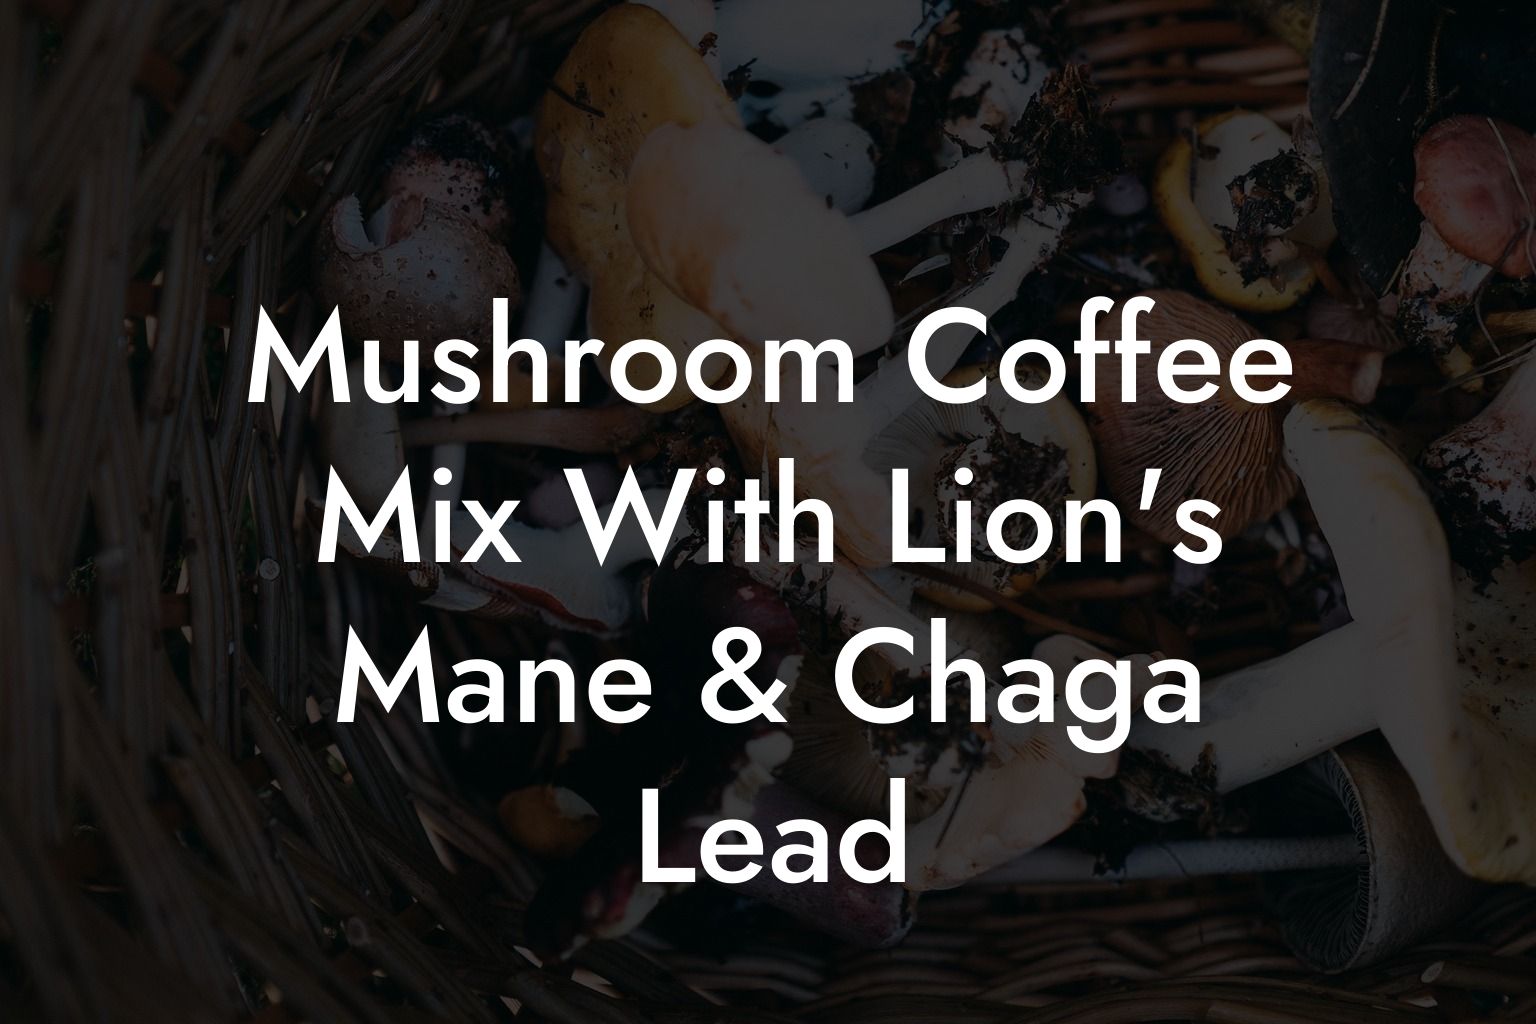 Mushroom Coffee Mix With Lion's Mane & Chaga Lead